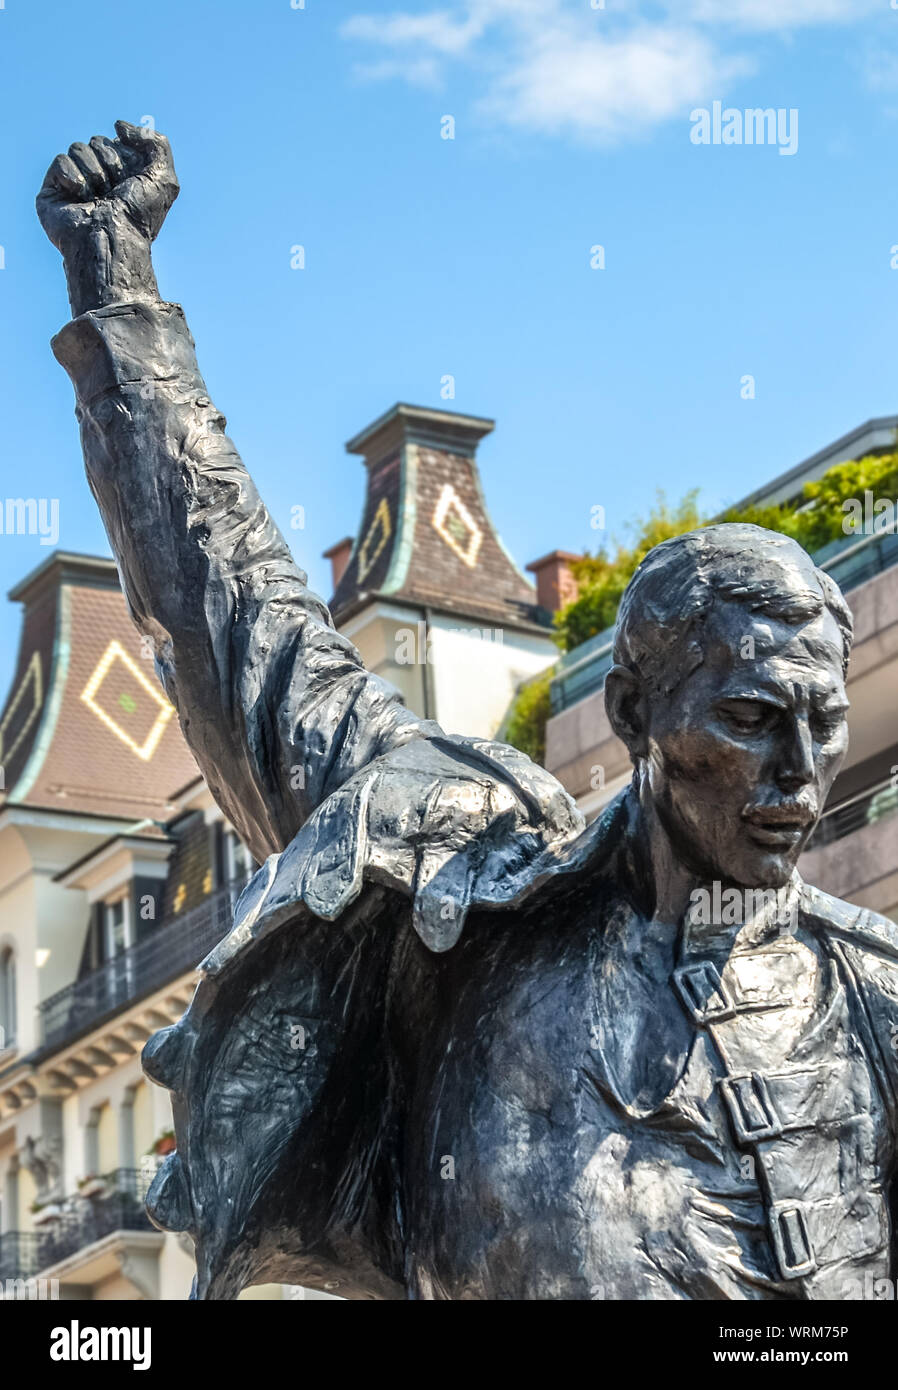 Montreux, Switzerland - July 26, 2019: Famous statue of Freddie Mercury, singer of the famous band Queen. Farrokh Bulsara, born in Zanzibar, Tanzania. The sculpture is a popular tourist landmark. Stock Photo